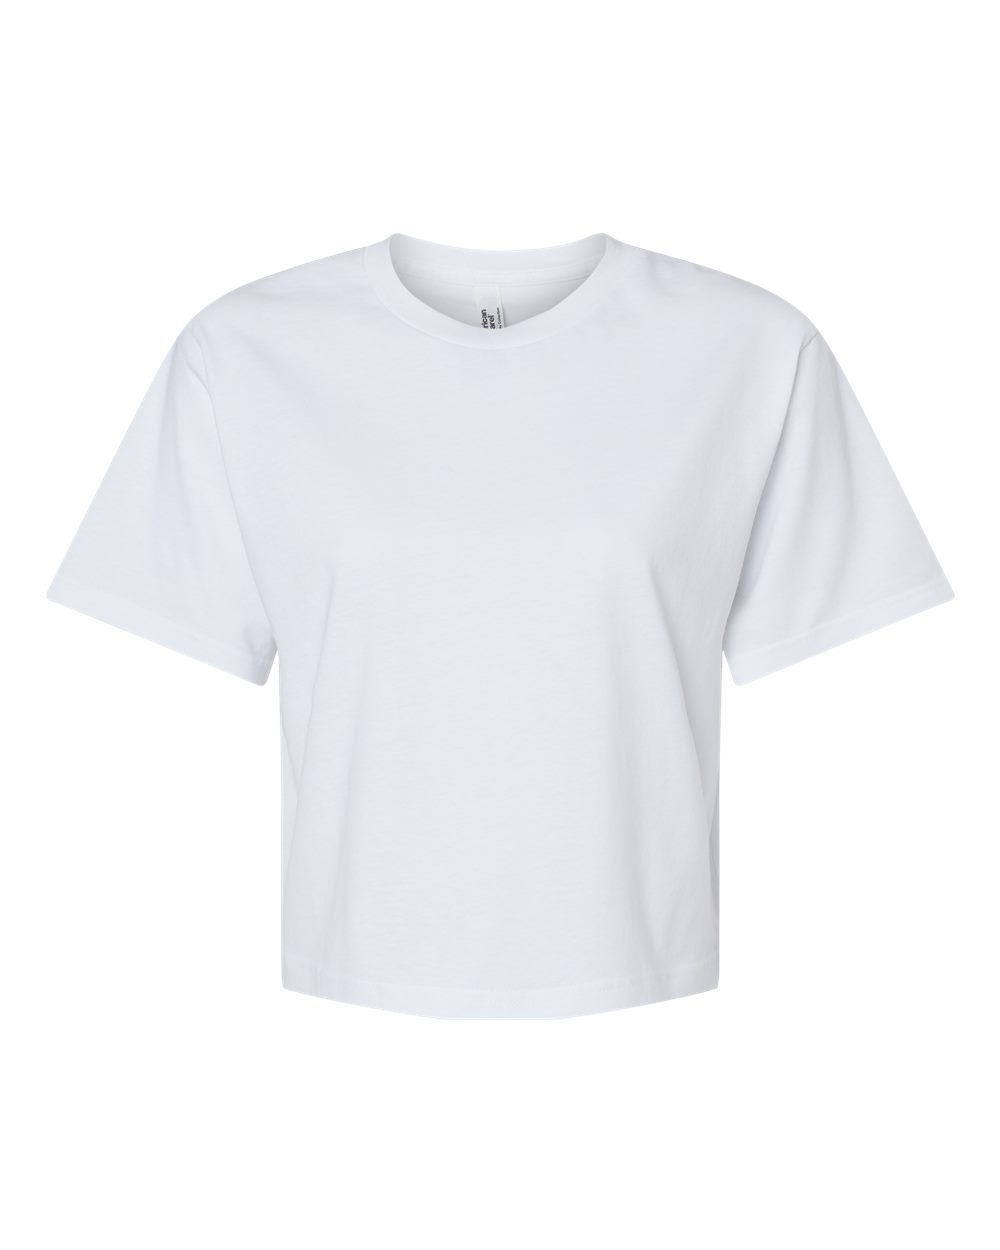 American Apparel 102 - Ladies' Fine Jersey Boxy T-Shirt